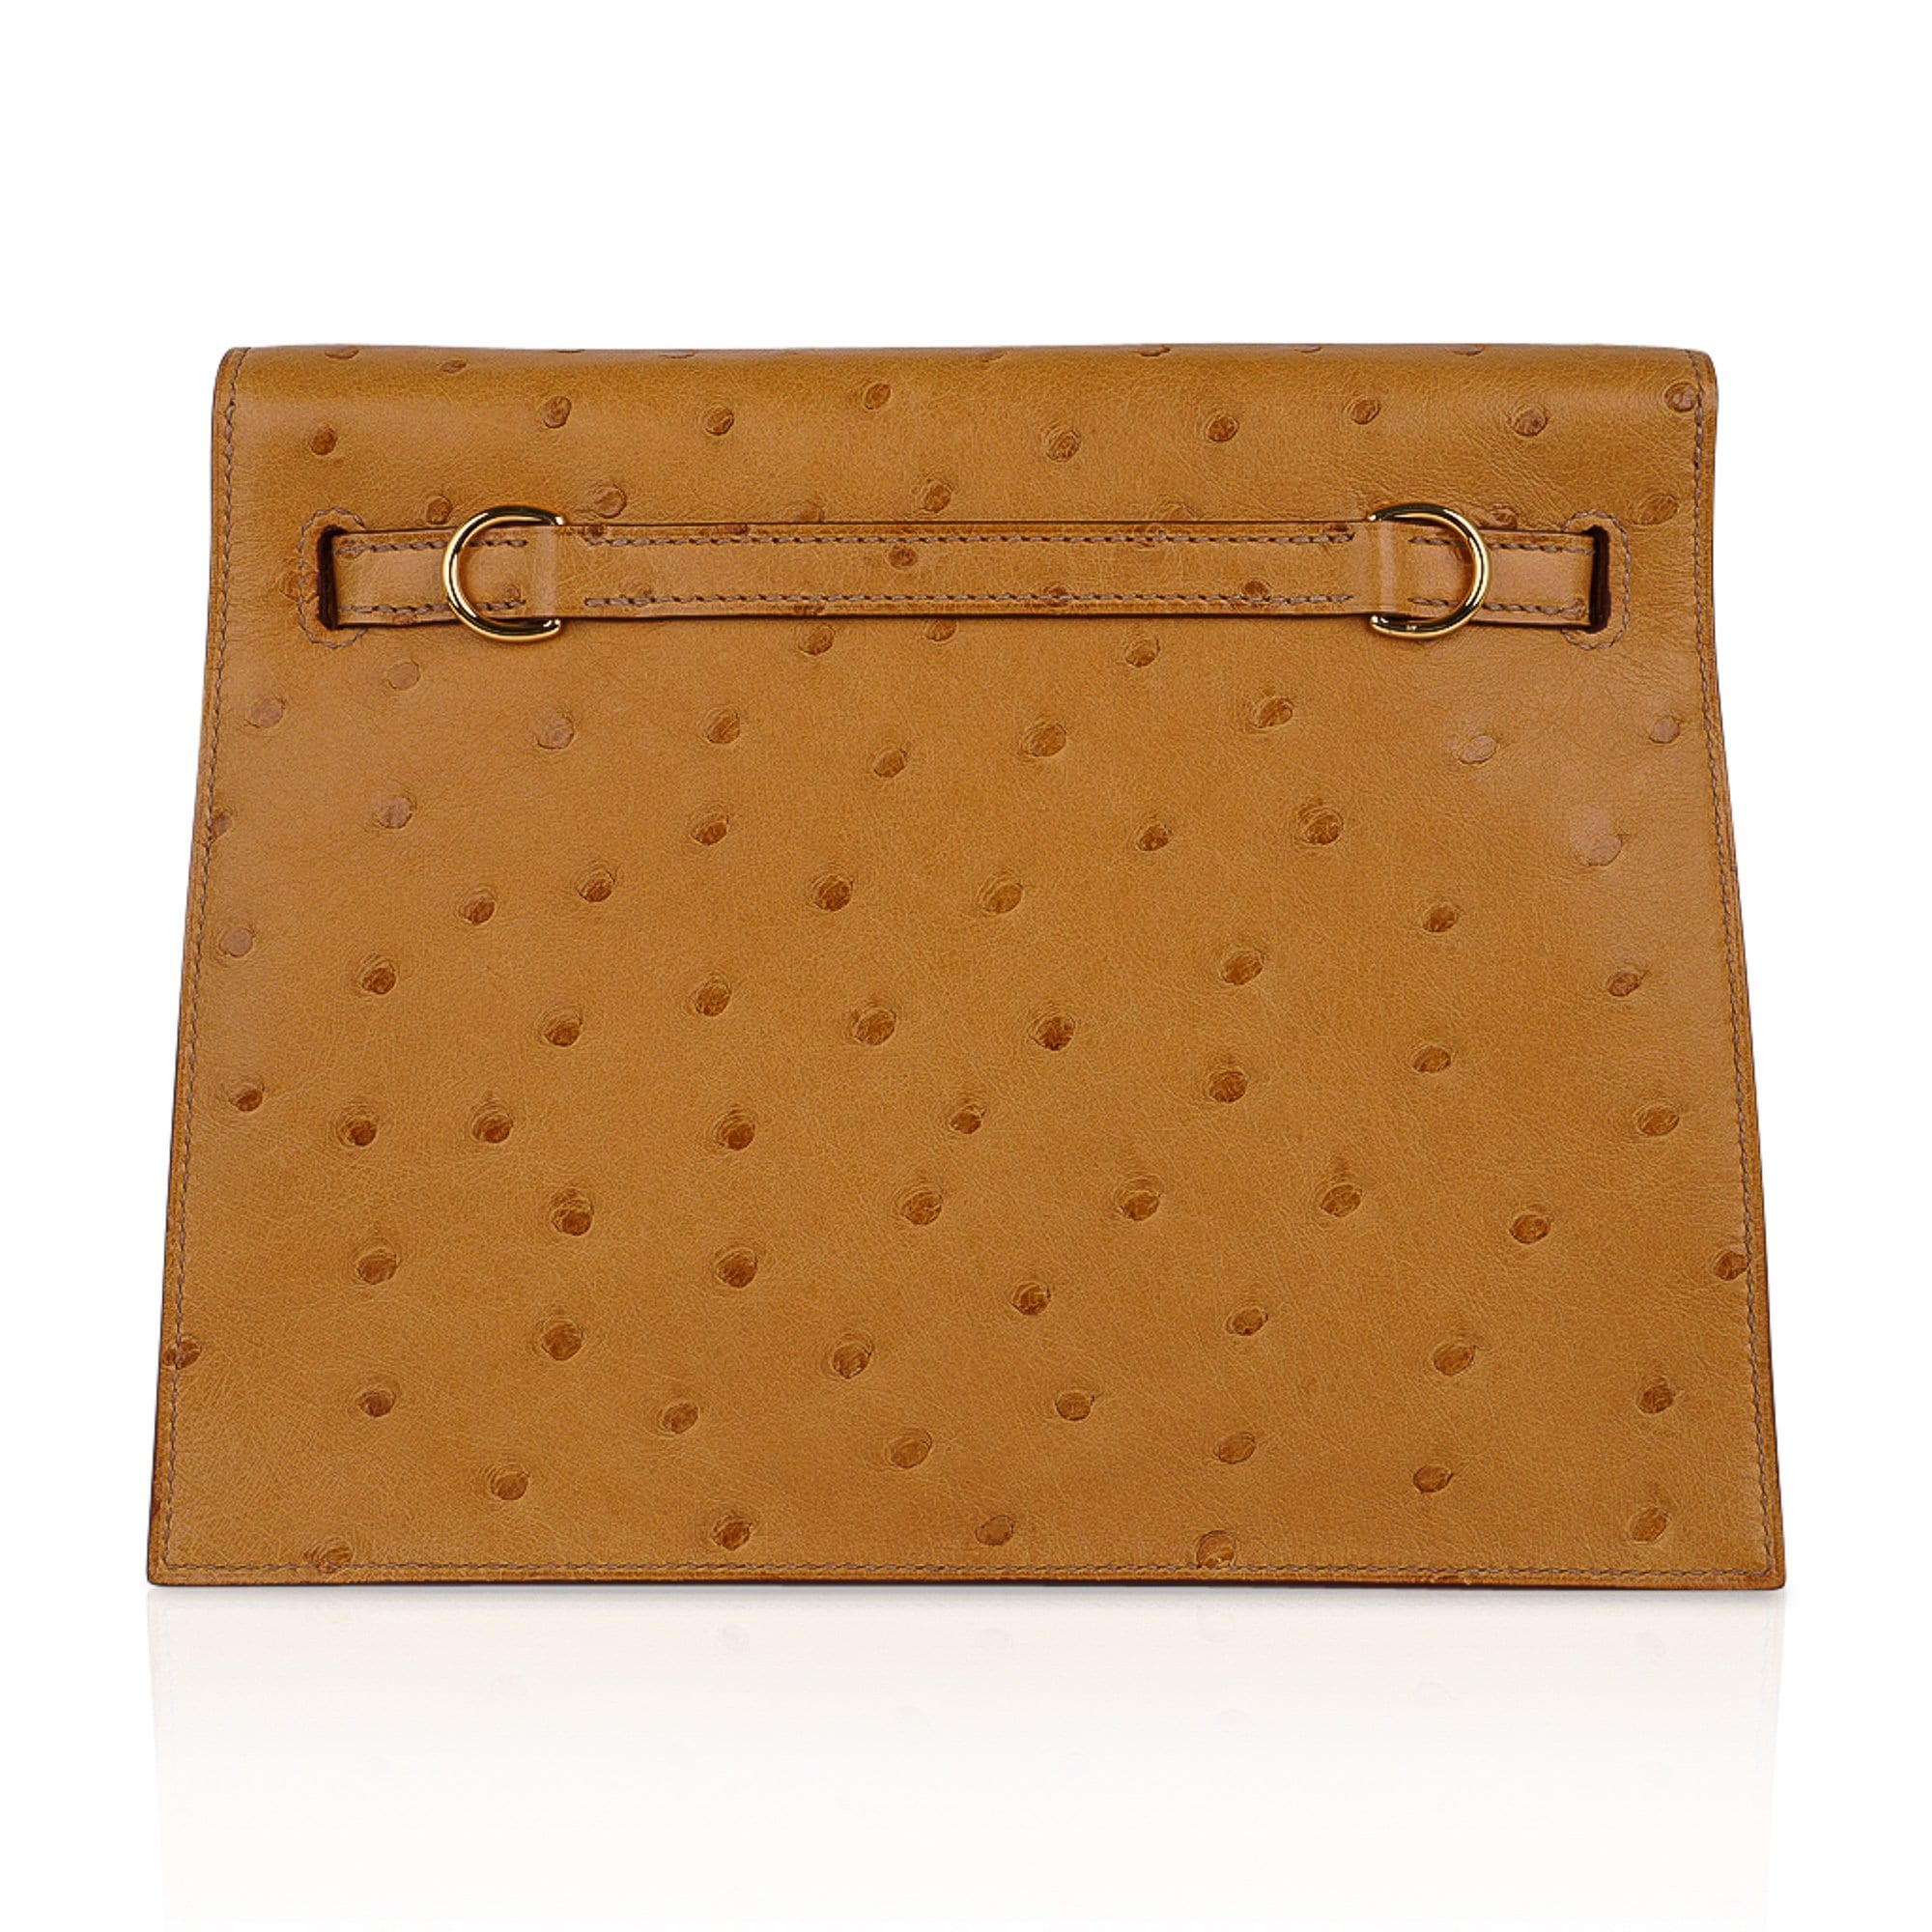 Vintage GUCCI orange brown color genuine ostrich leather bolide